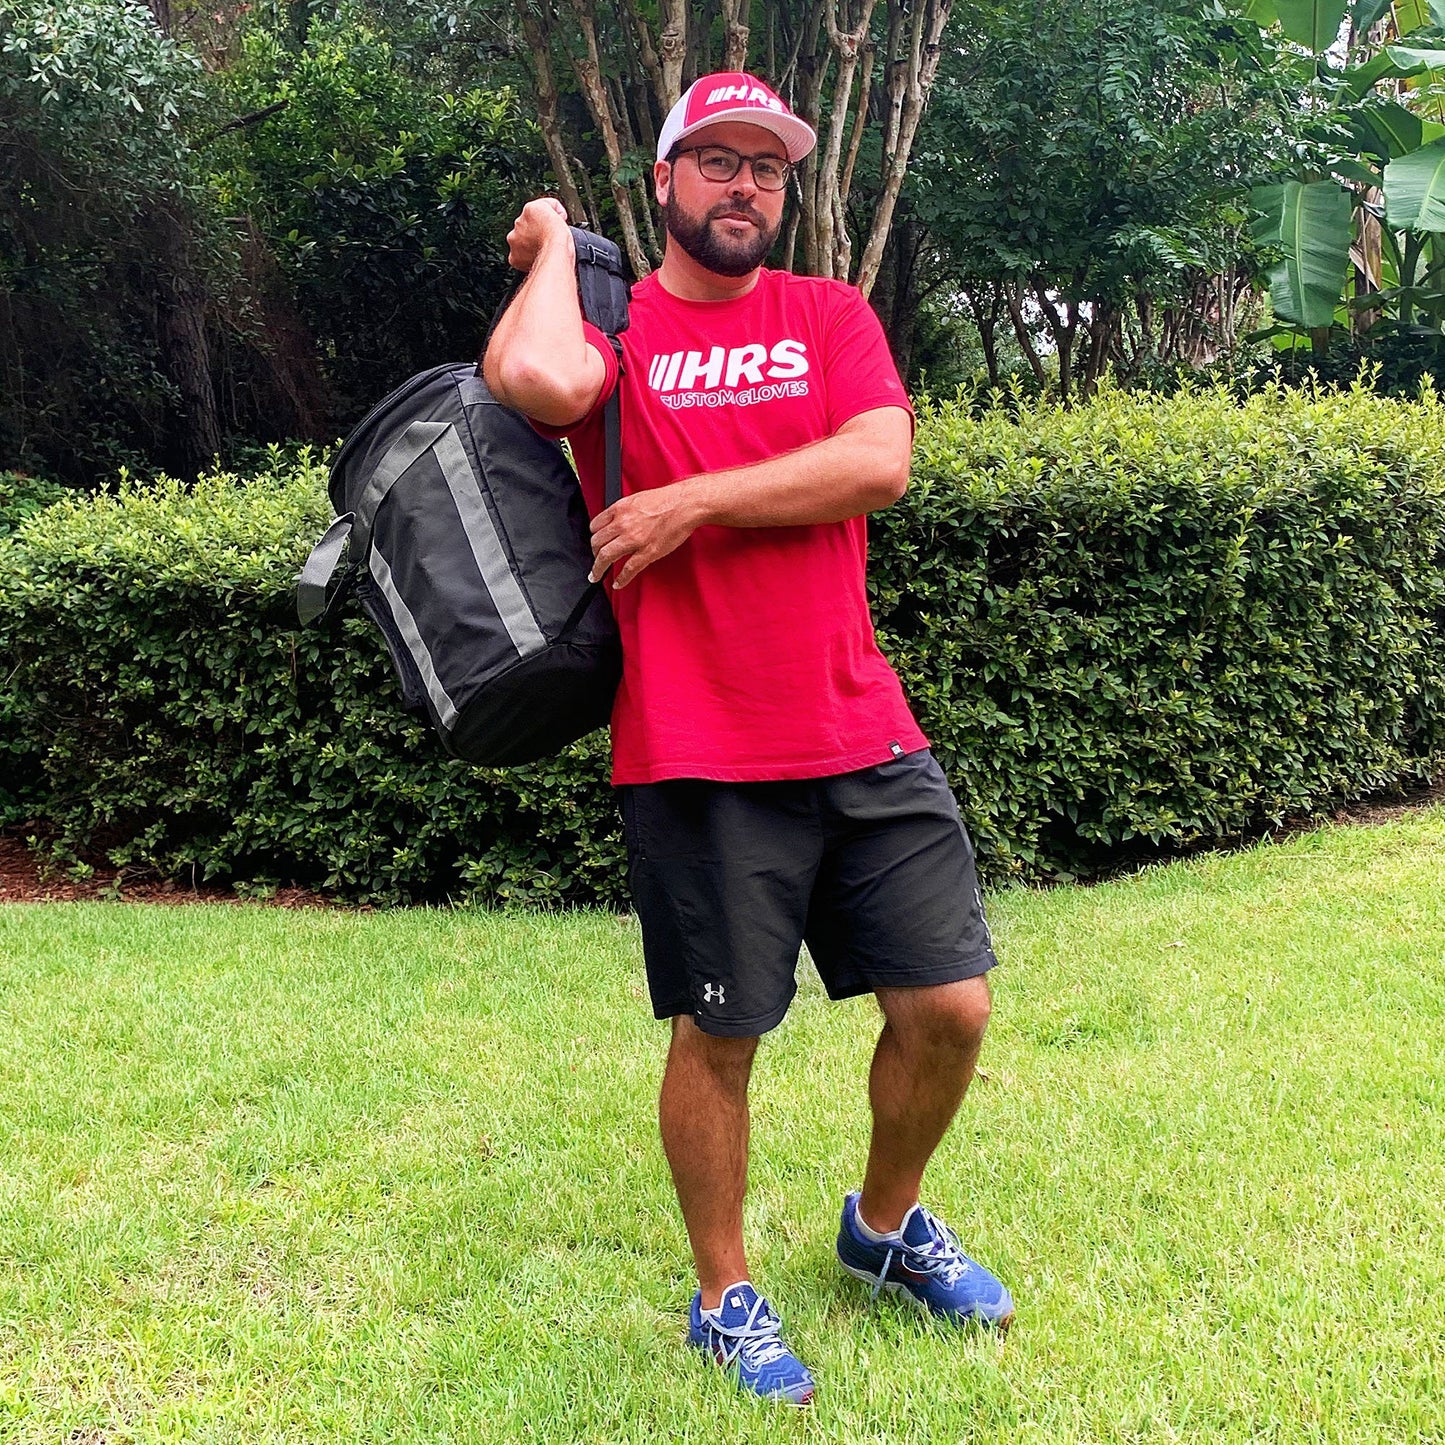 Bucket Bag Backpack For Baseball / Softball - Carry Your Bucket Of Baseballs Or Softballs With Ease